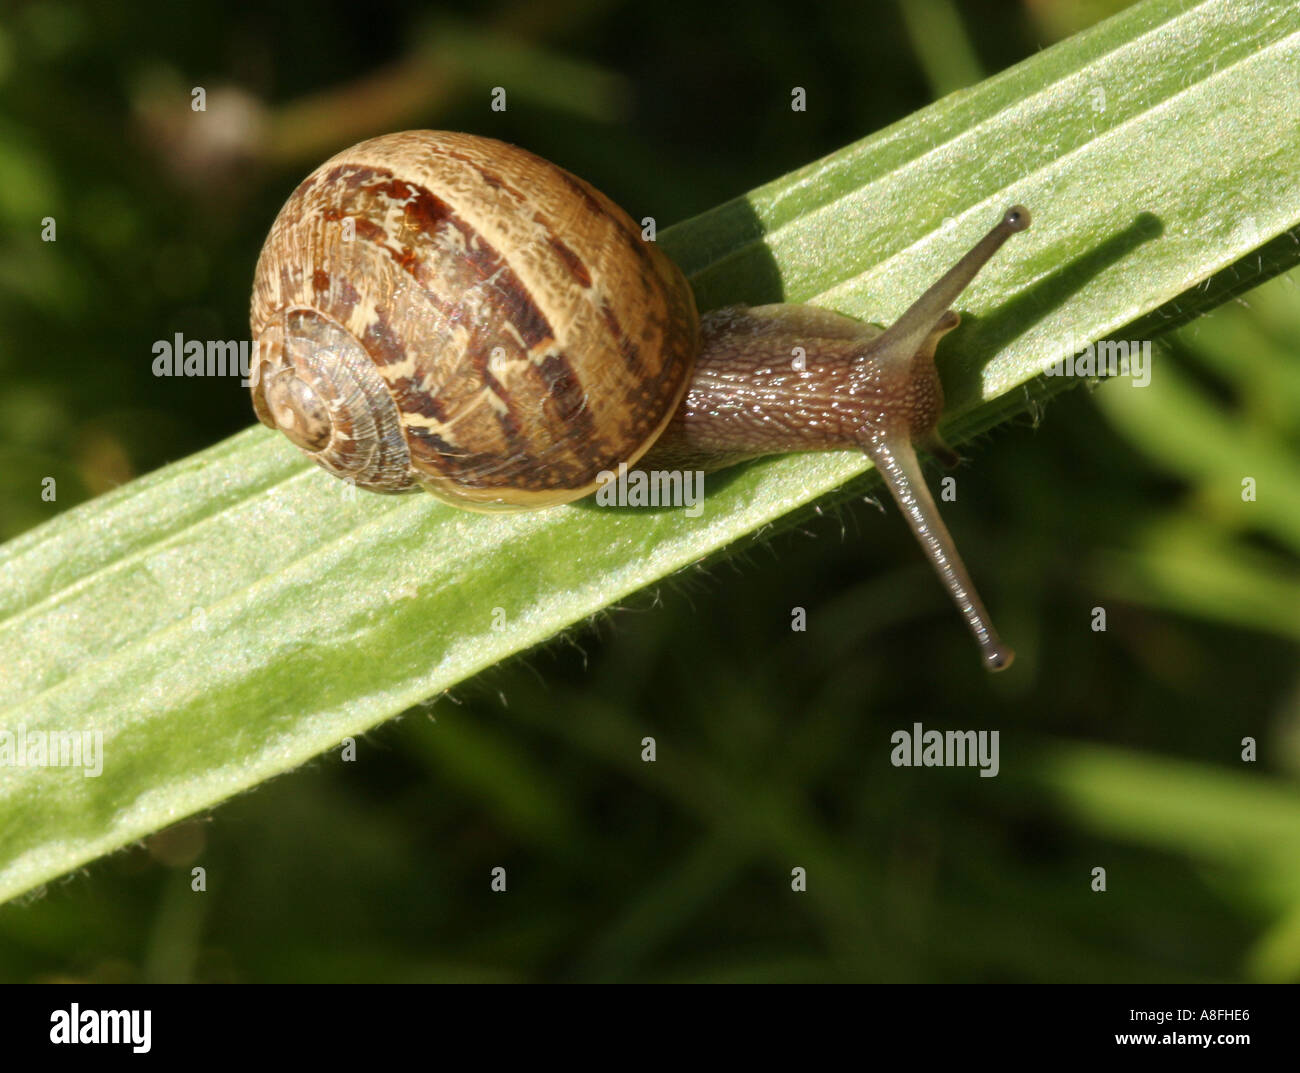 A Snail on a Leaf Stock Photo